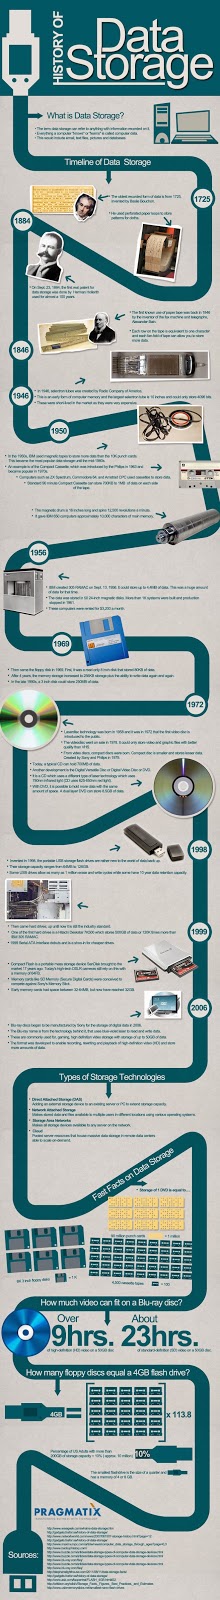  History of fata storage